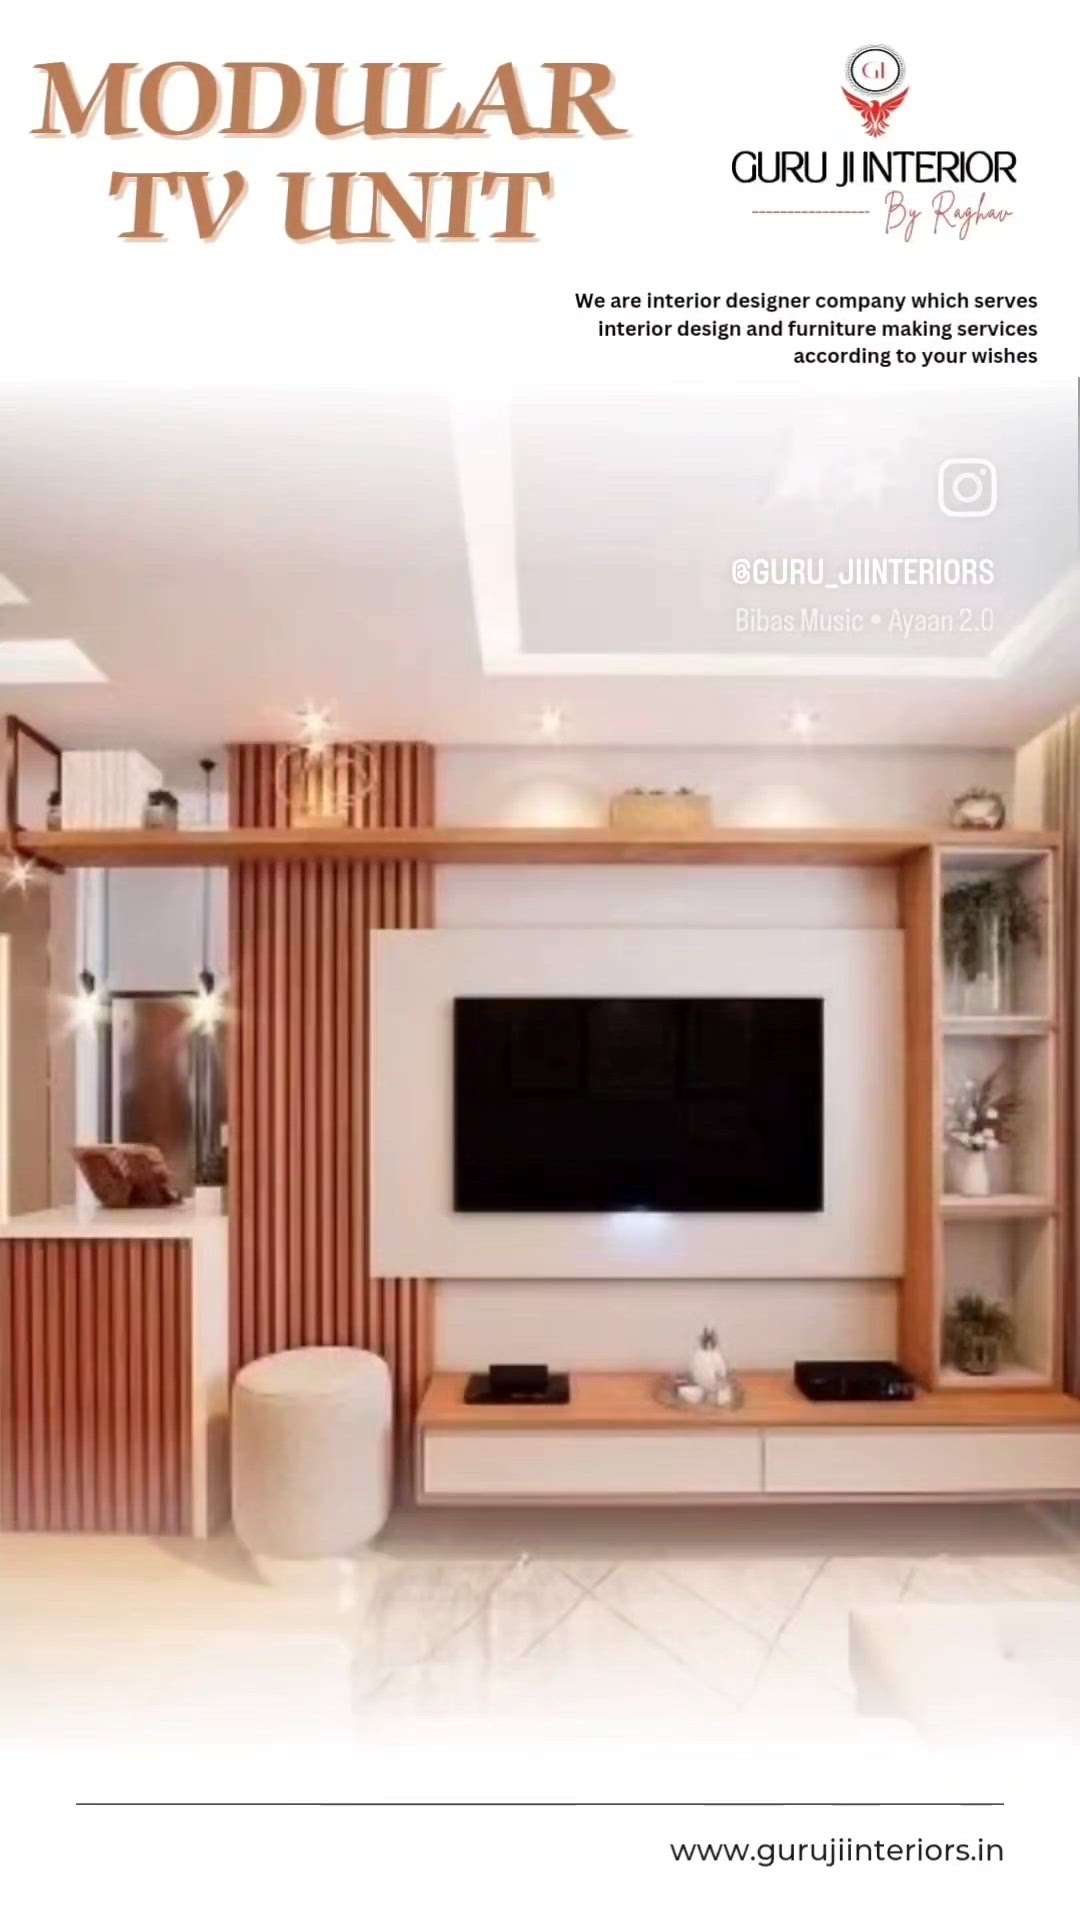 Modular TV Unit 
@ Great Designs for your Home 
.
Guru ji interior
By Raghav
Call - 9870533947 ,7303111335
#gurujiinteriors
#Interiordesign #luxuryhomes
#PerfectInterior #homedecore
#modularkitchen #wardrobe 
#homeoffice #tvunit